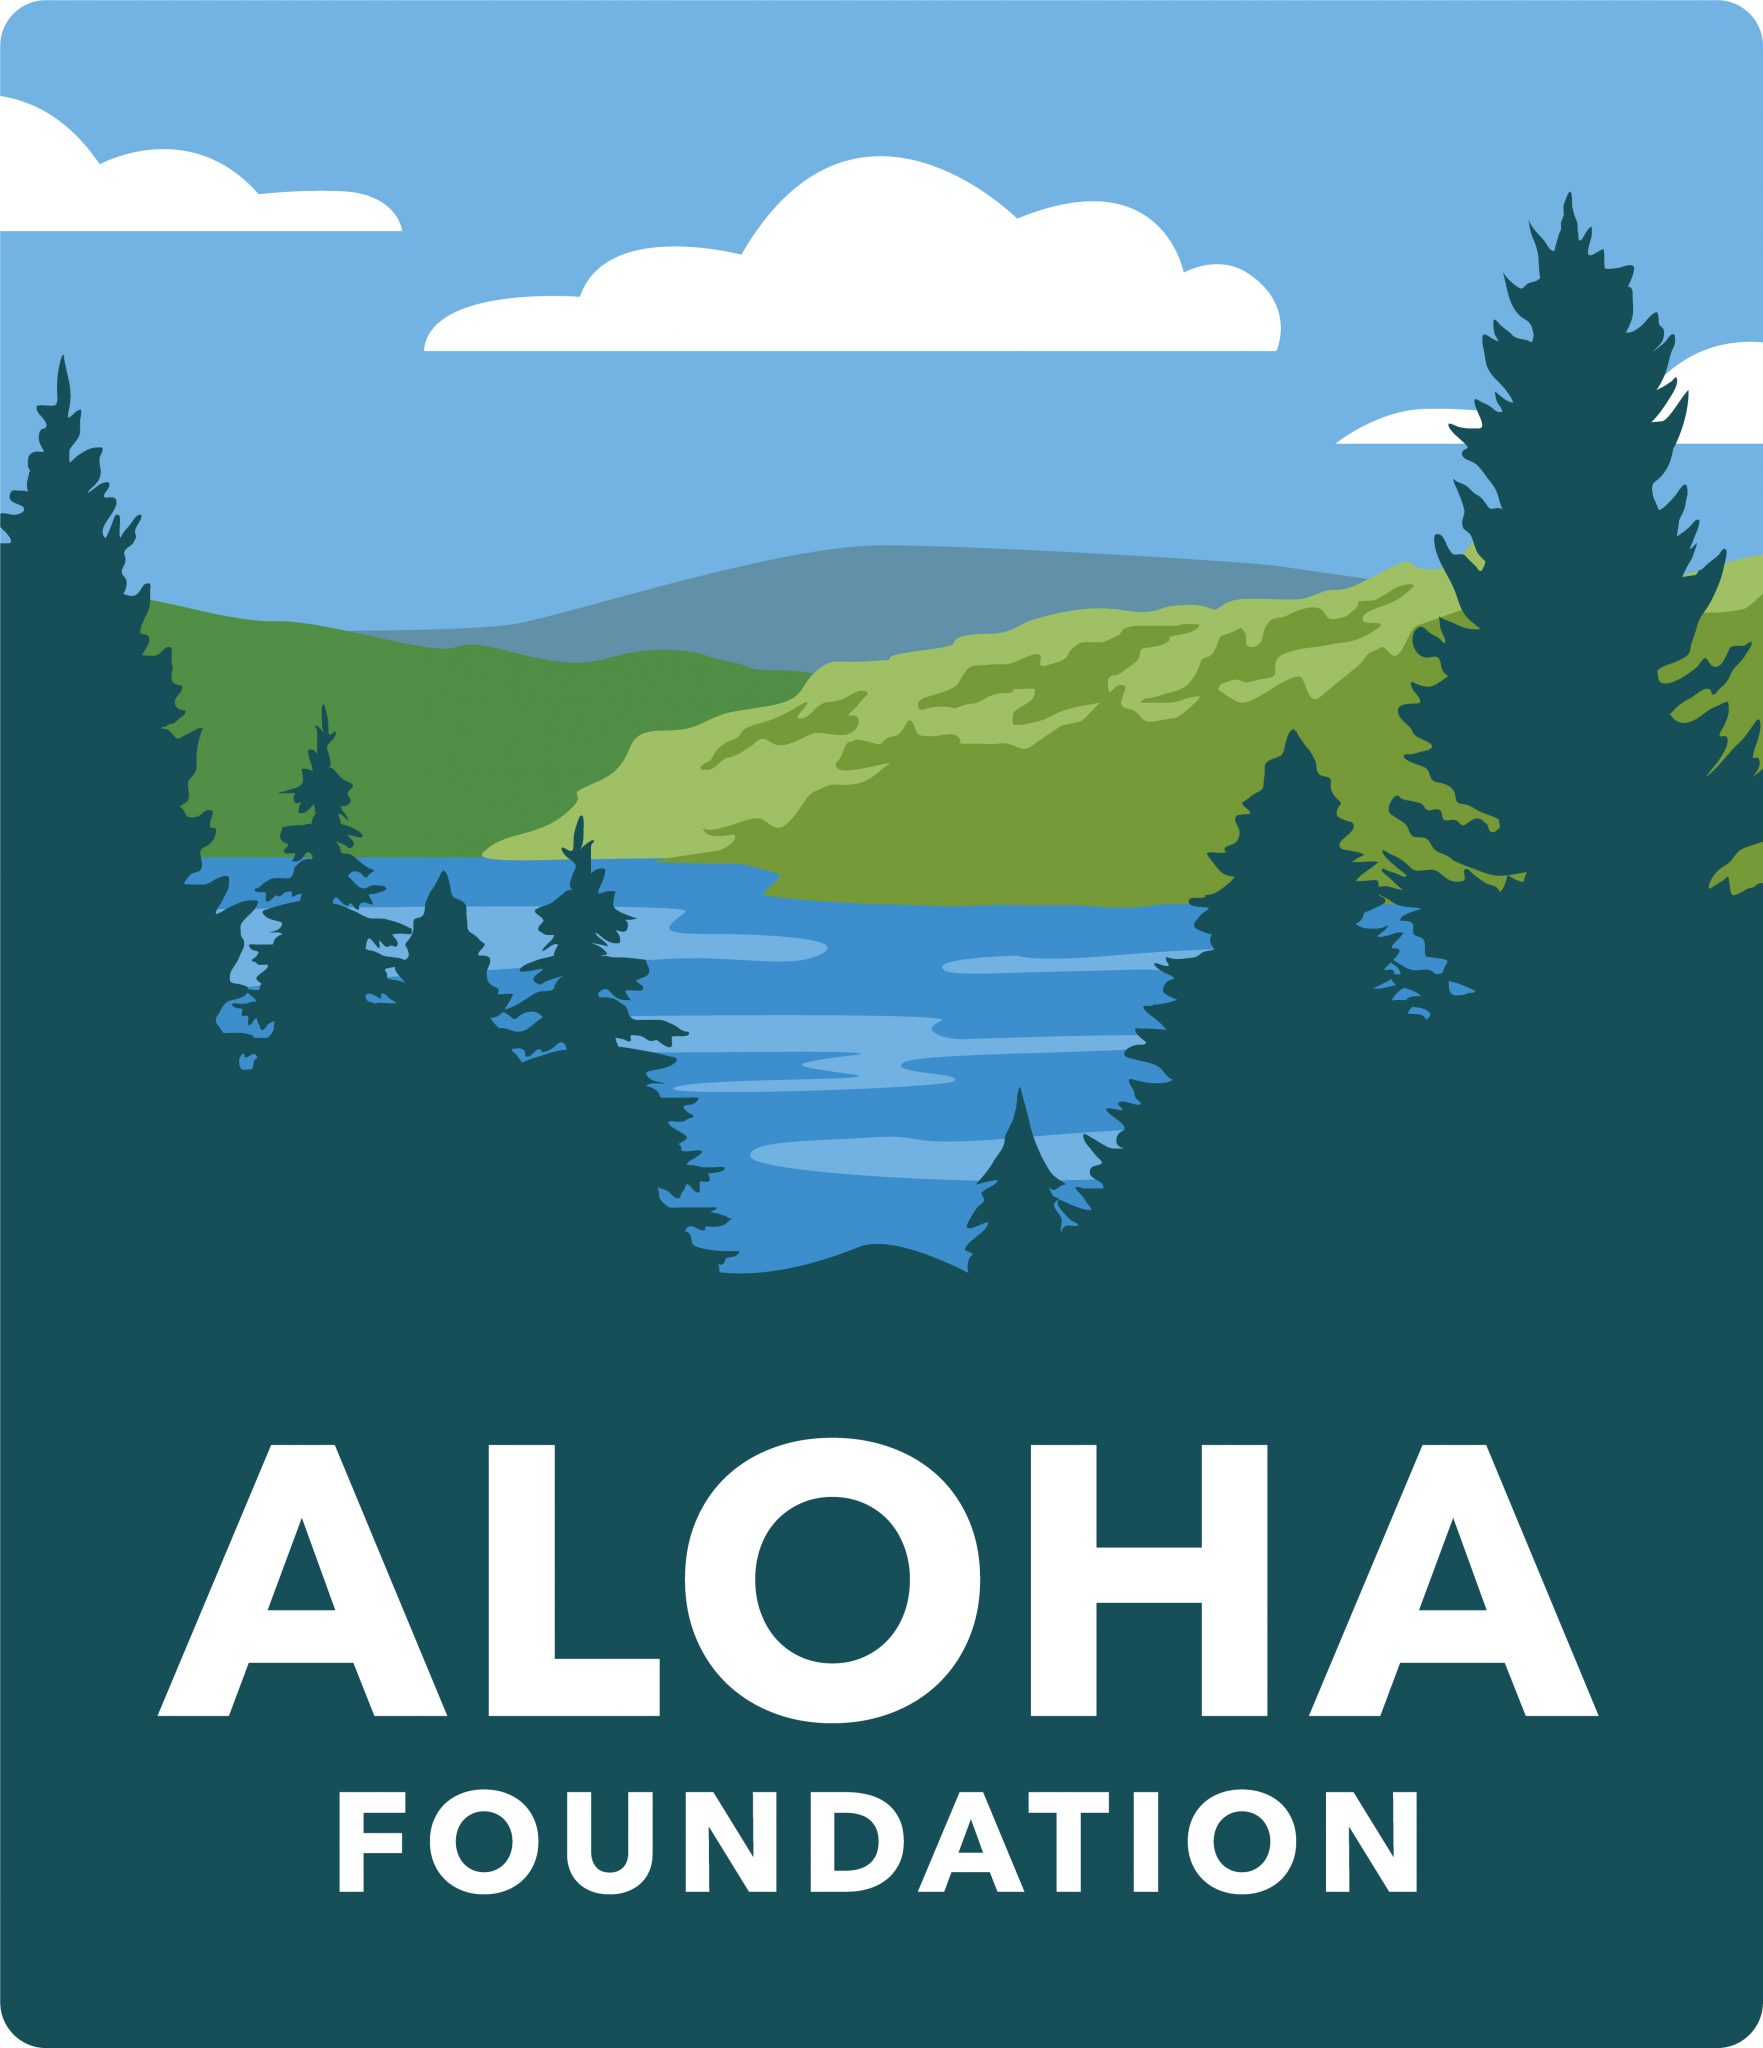 The Aloha Foundation logo with pine trees, the lake, and the blue sky.